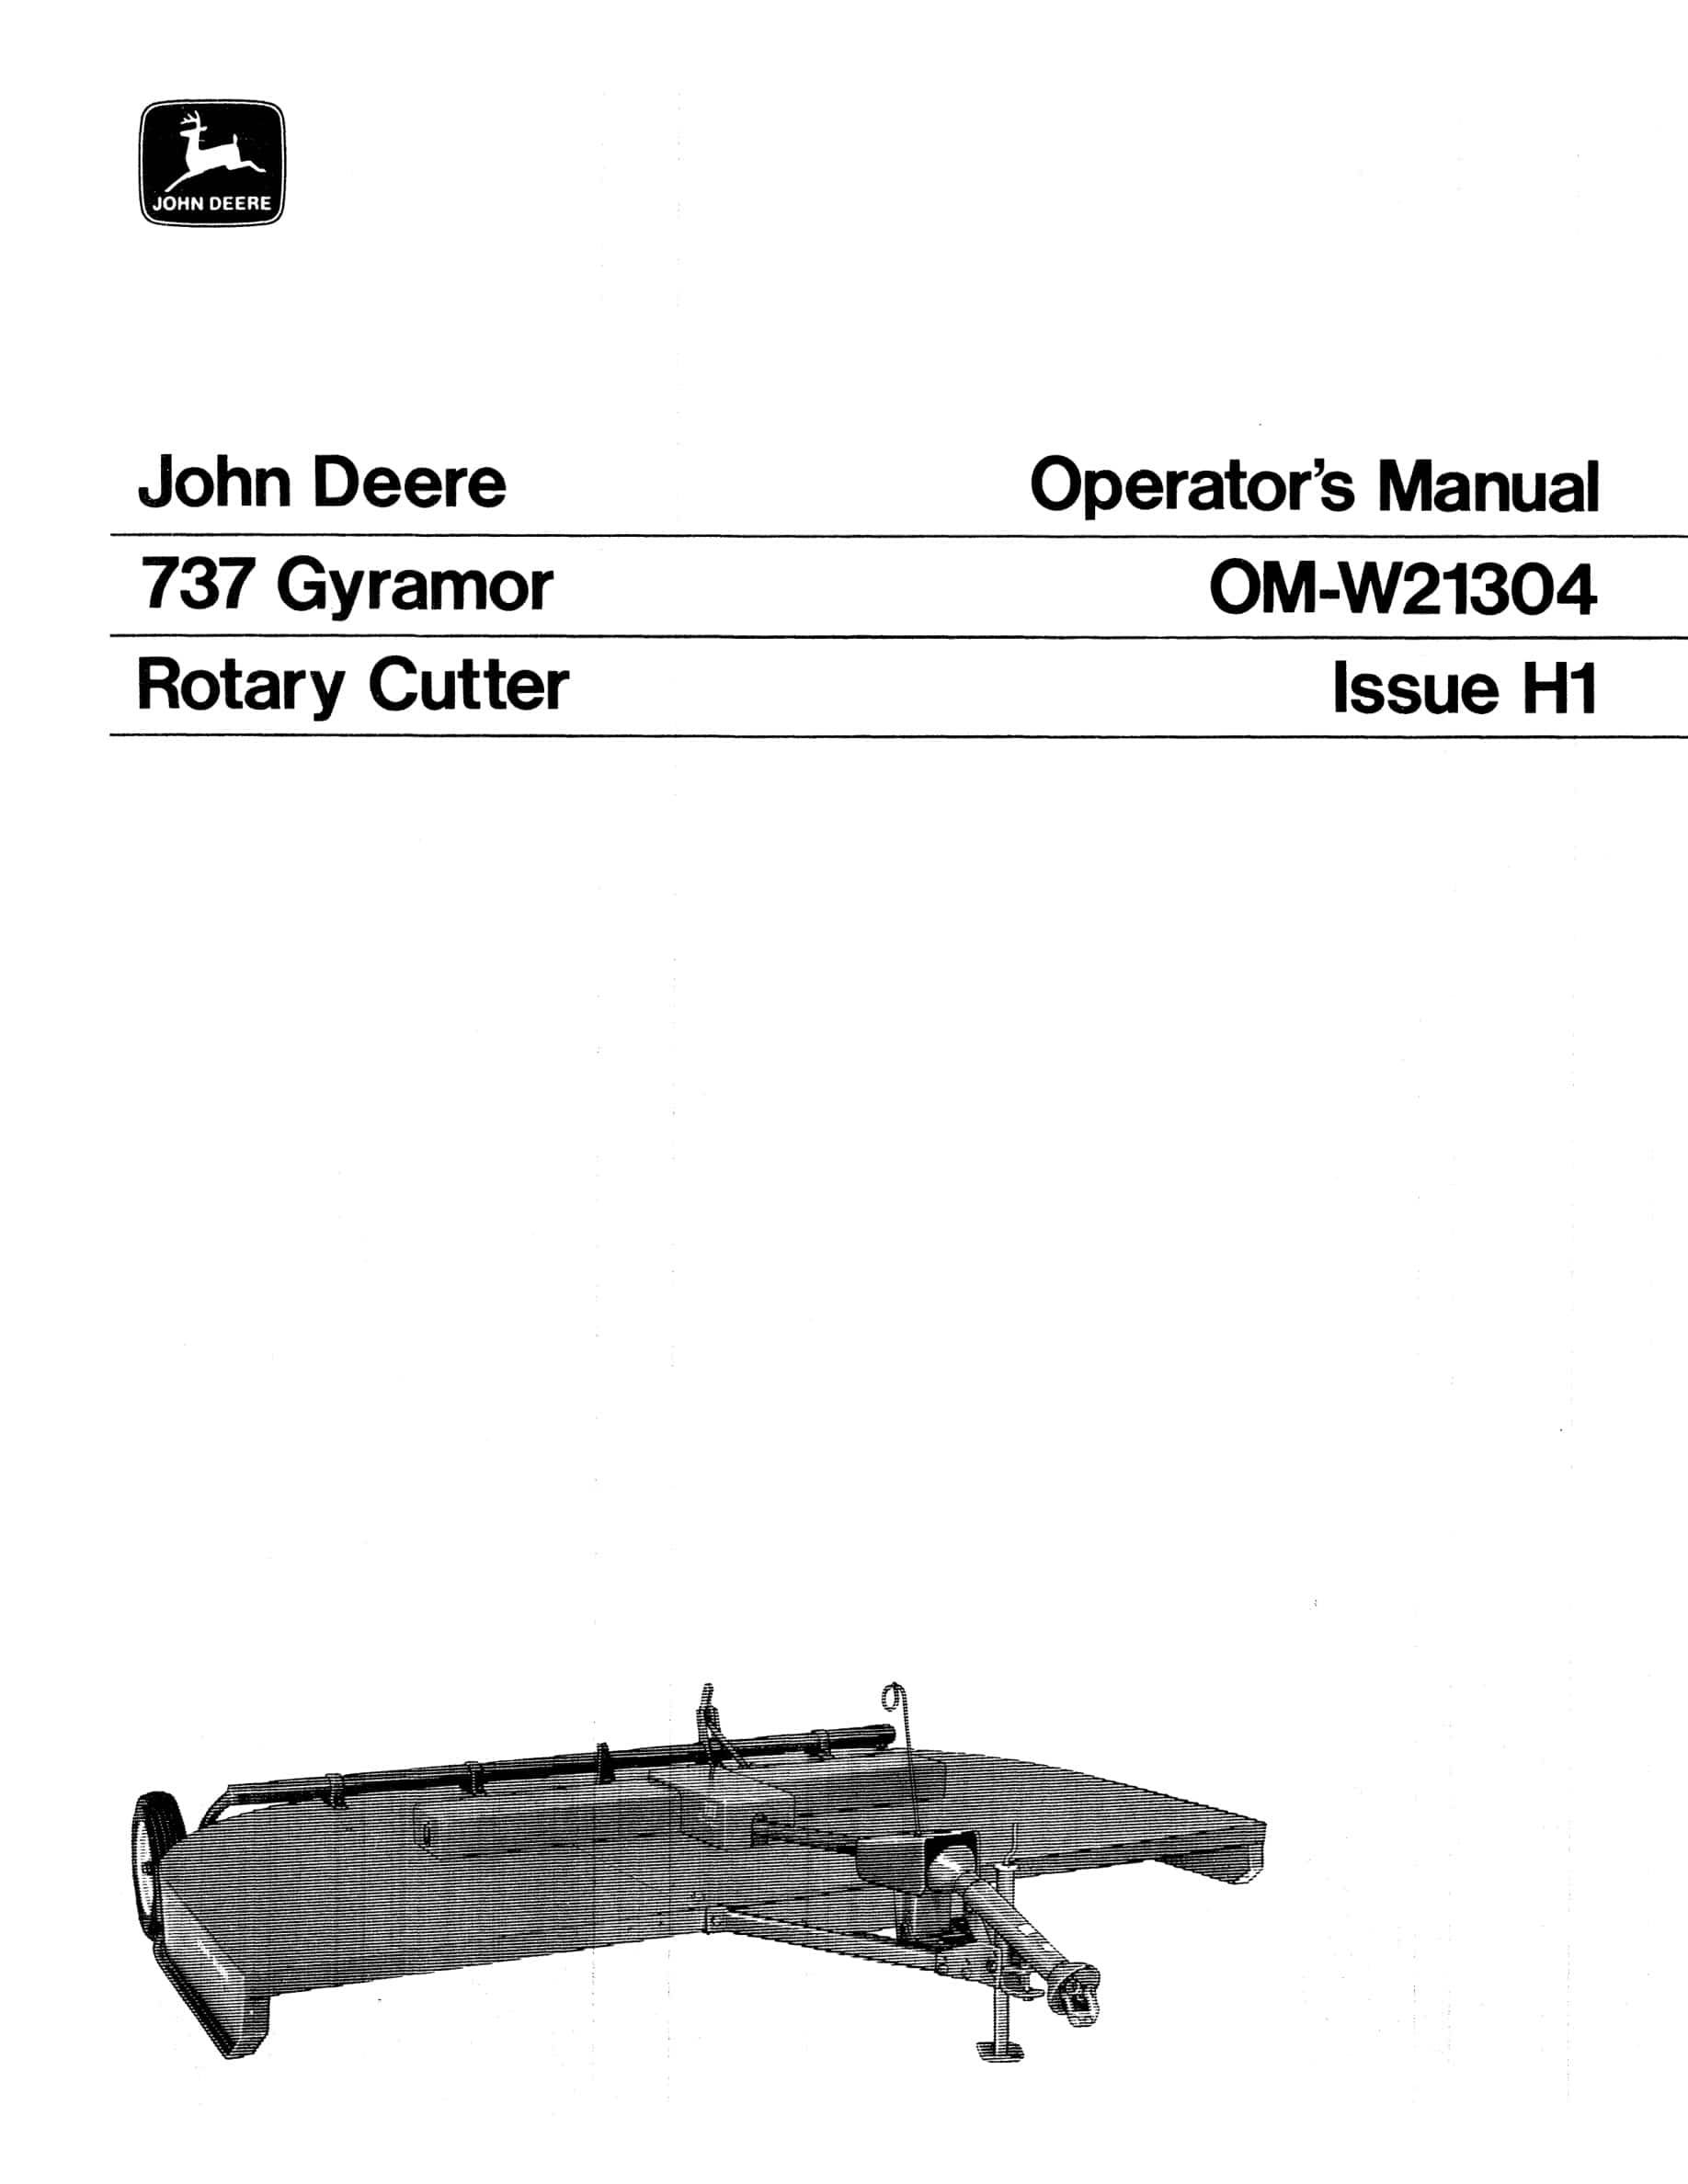 John Deere 737 Gyramor Rotary Cutter Operator Manual OMW21304-1